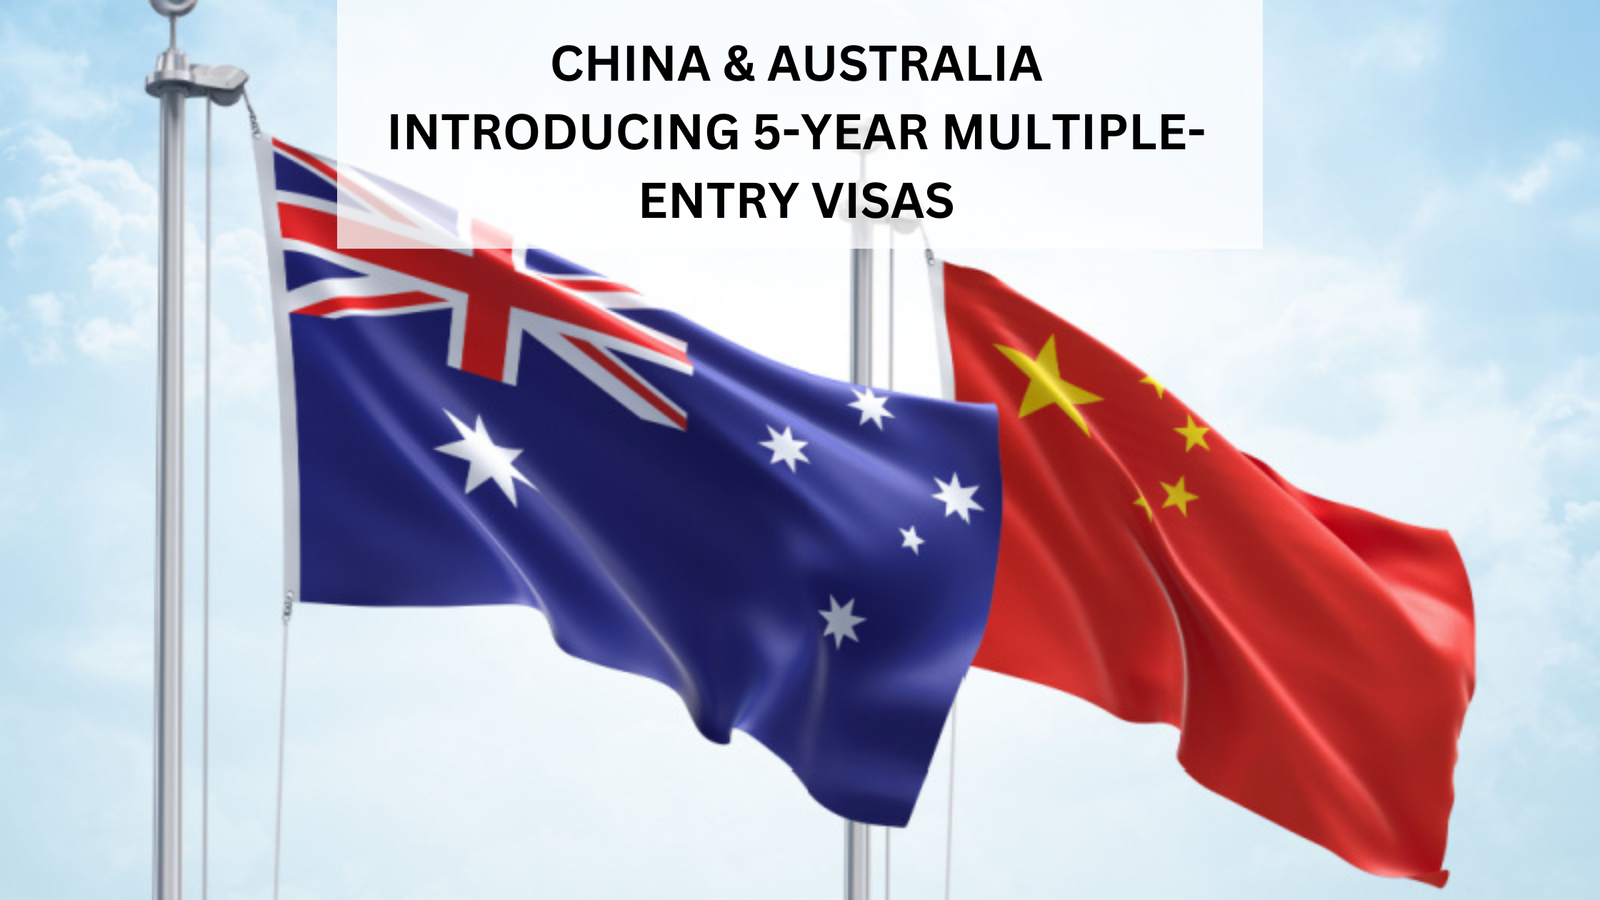 5-Year Multiple-Entry Visas | China Between Australia